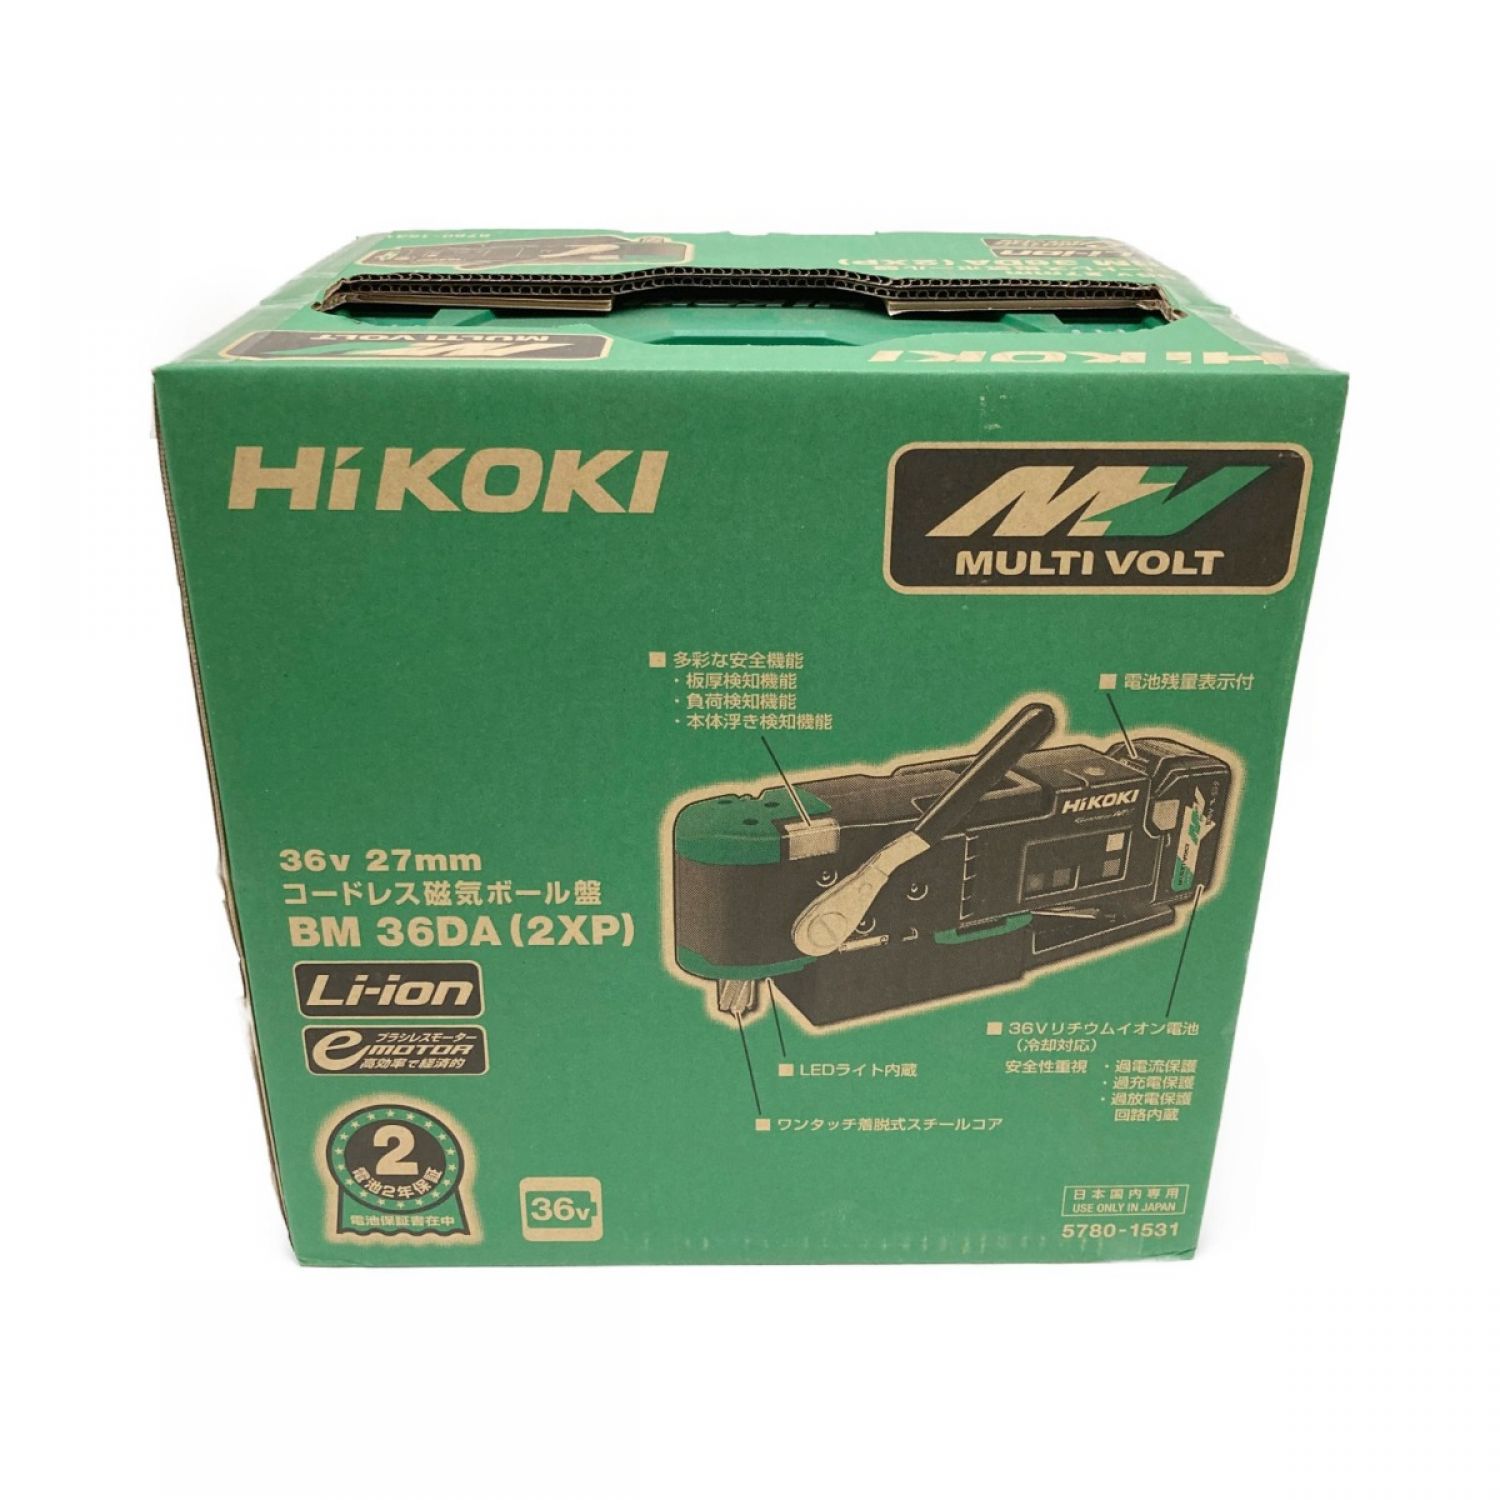 HIKOKI マルチボルト コードレス磁気ボール盤 BM36DA(2XP) - 16